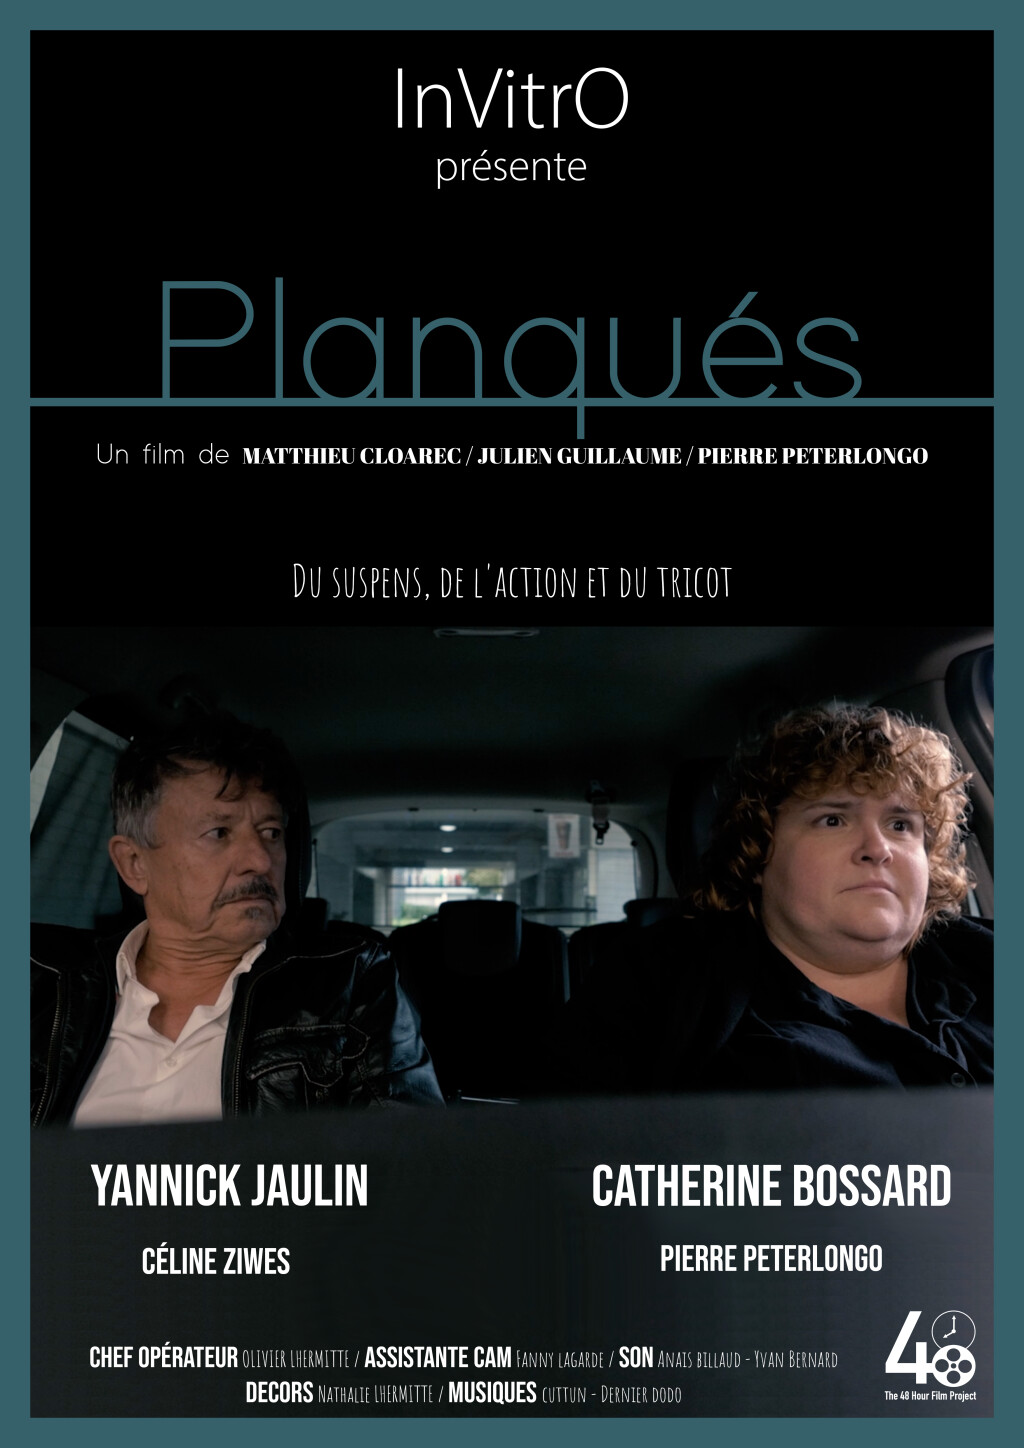 Filmposter for Planqués